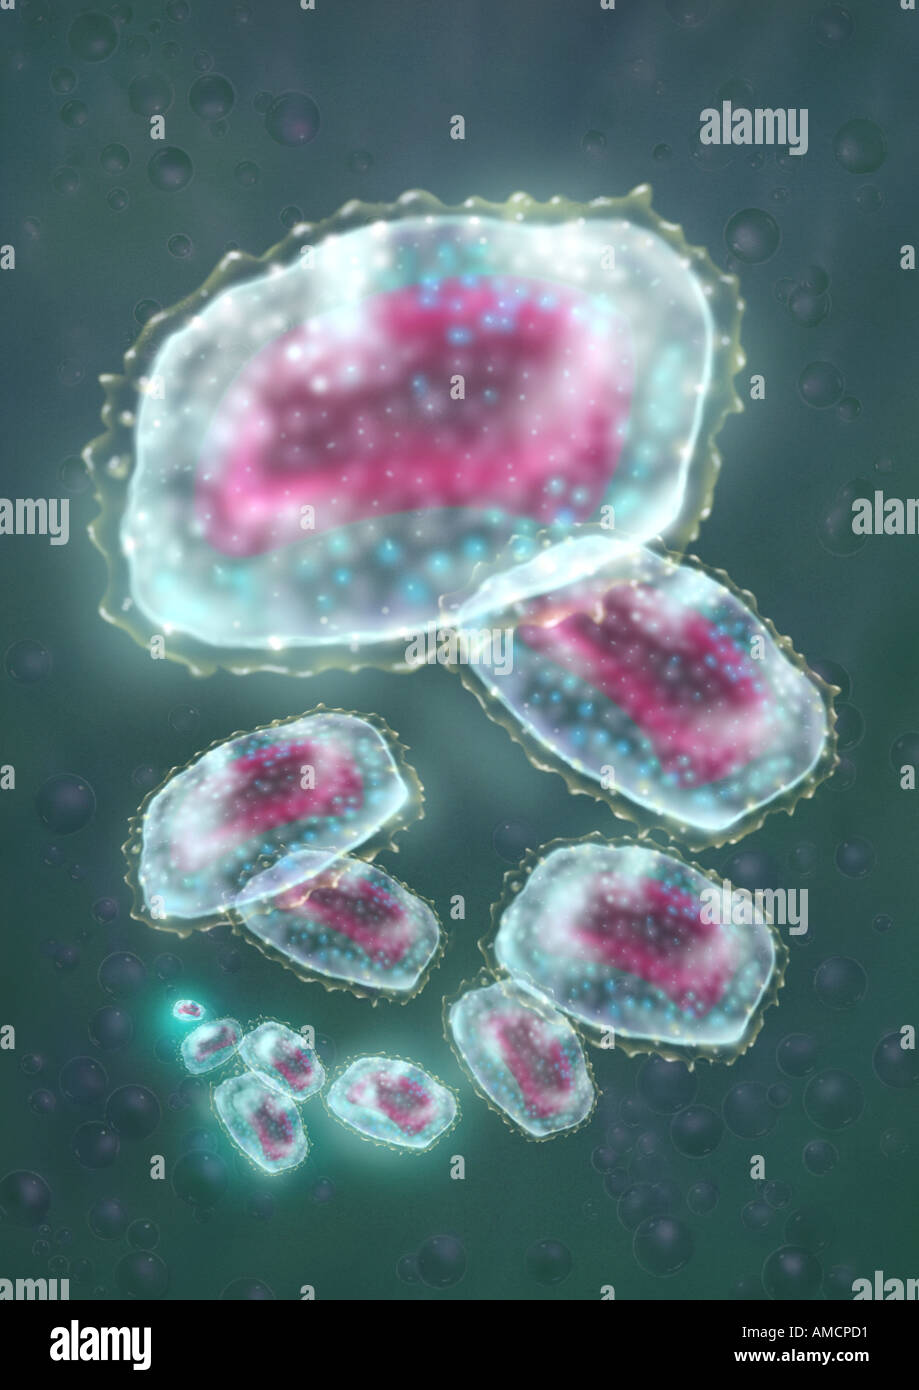 Illustration - smallpox virus cell membrane Stock Photo